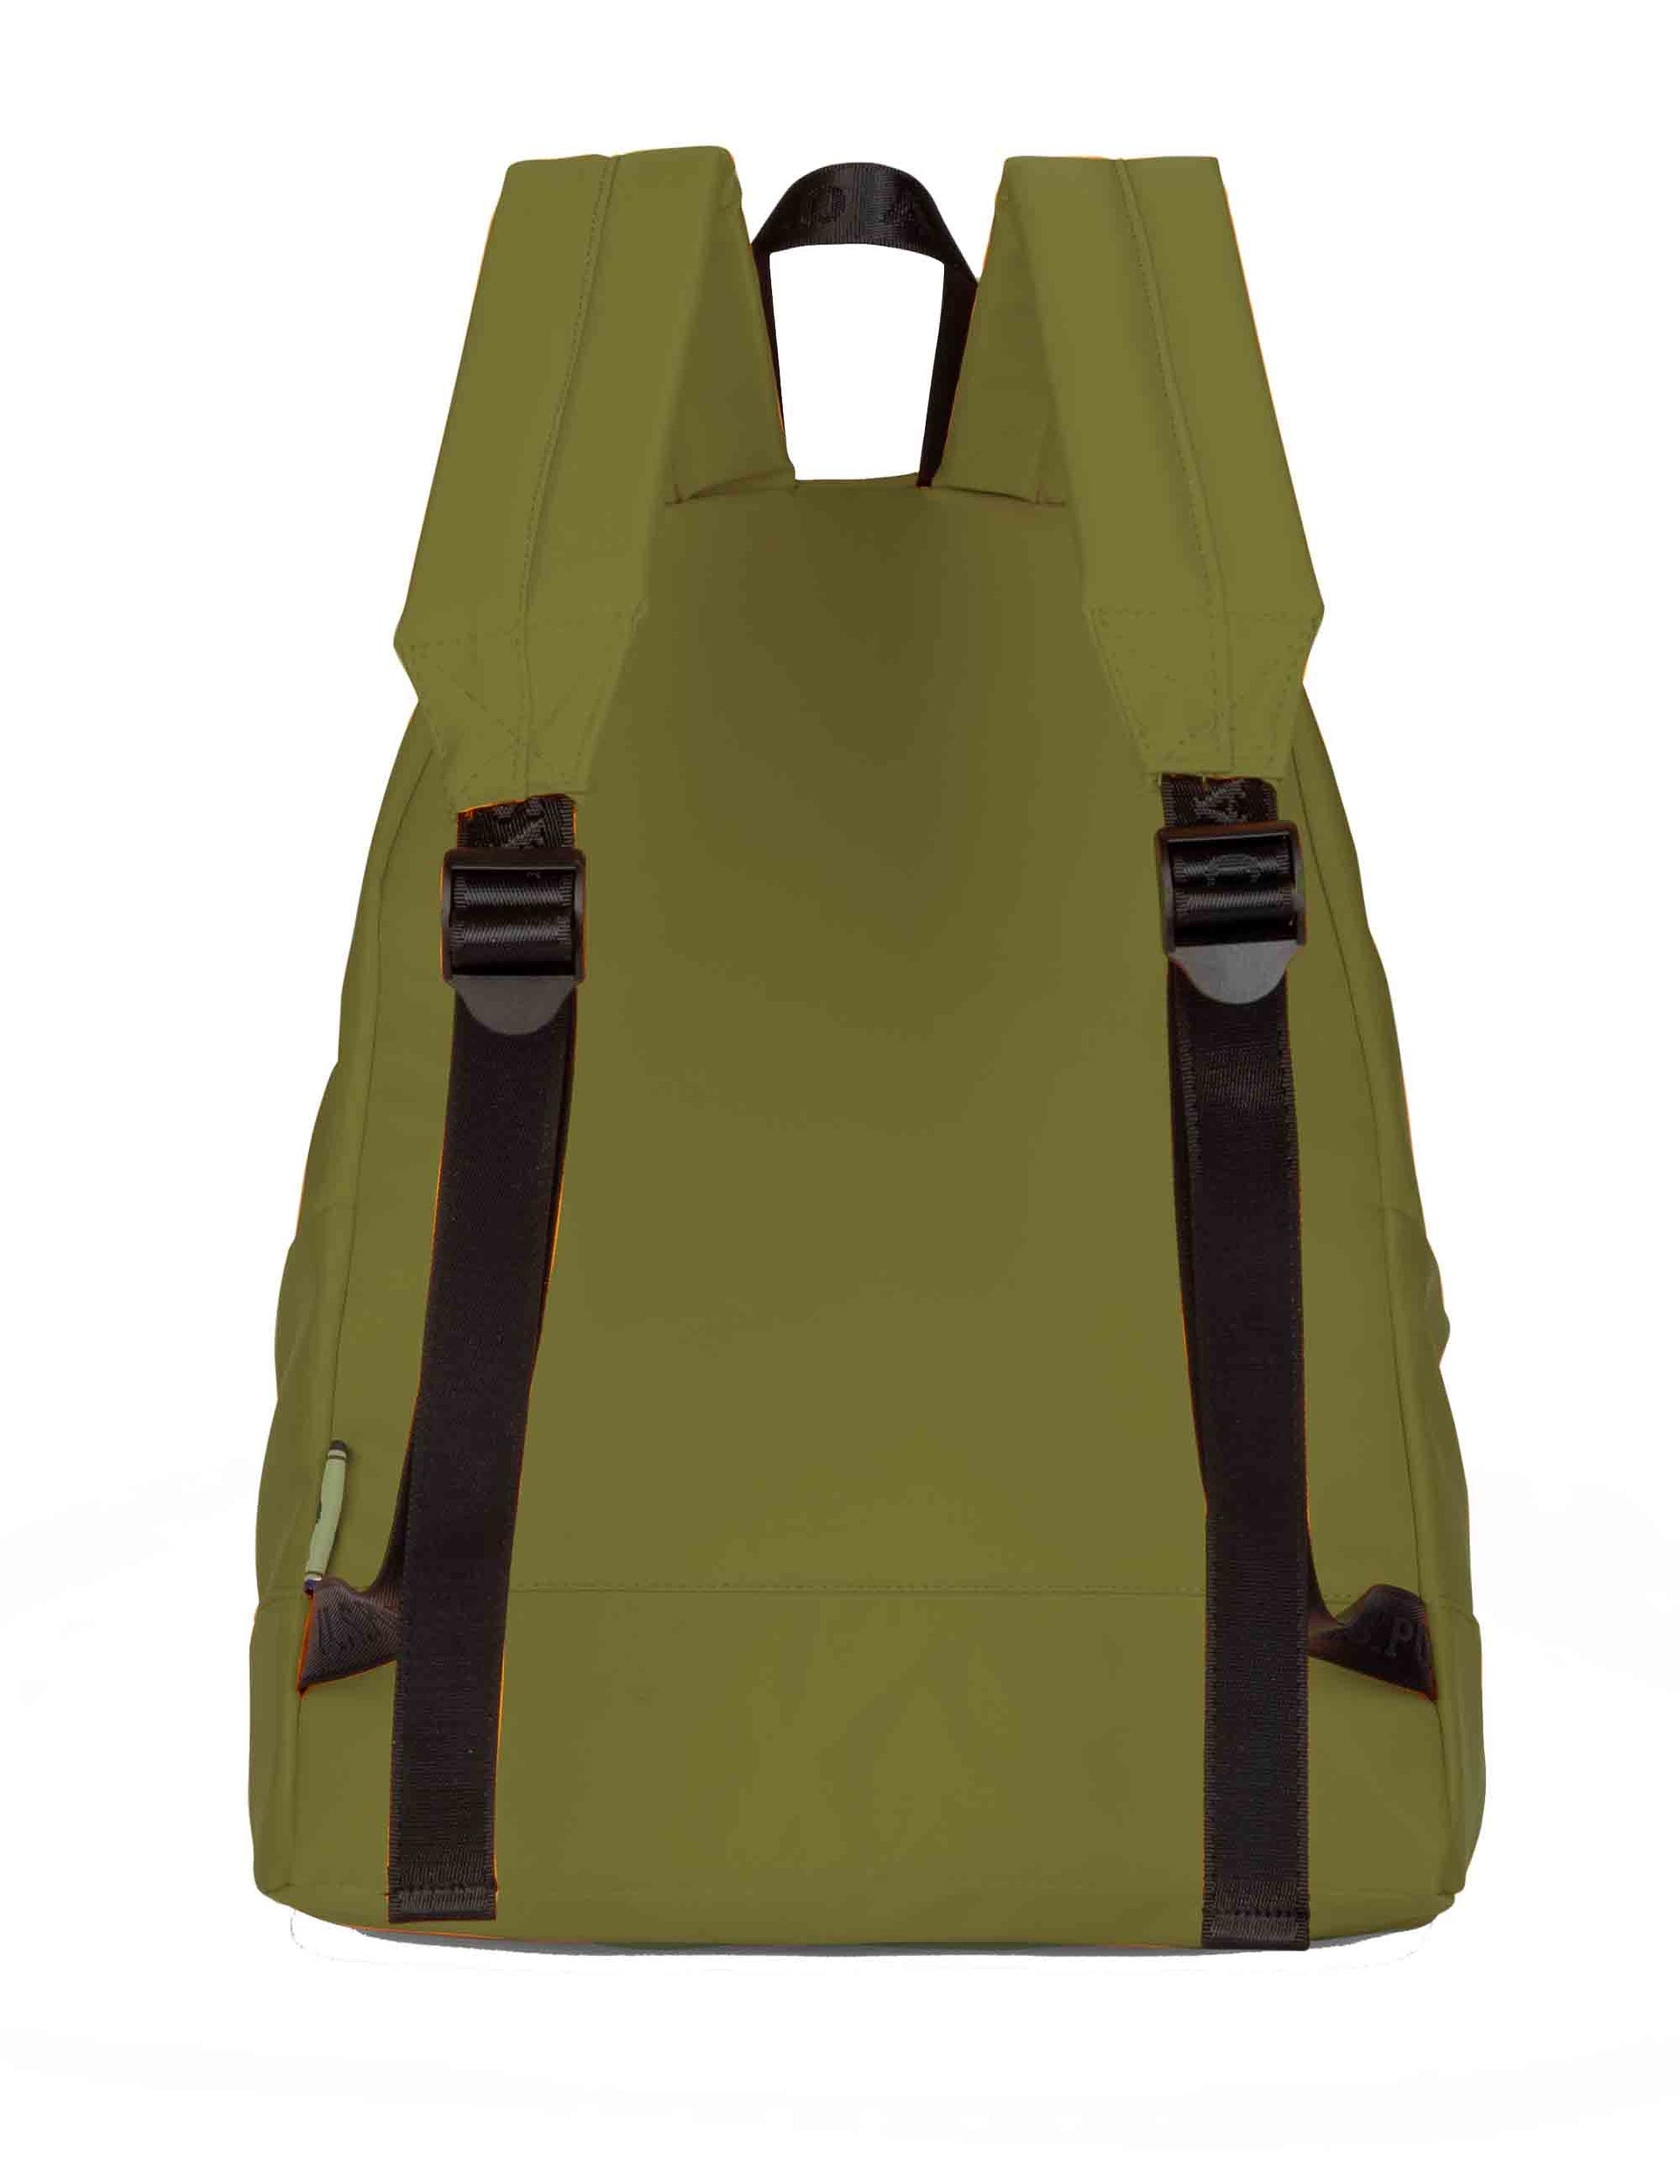 Bigfork men's backpacks in green nylon